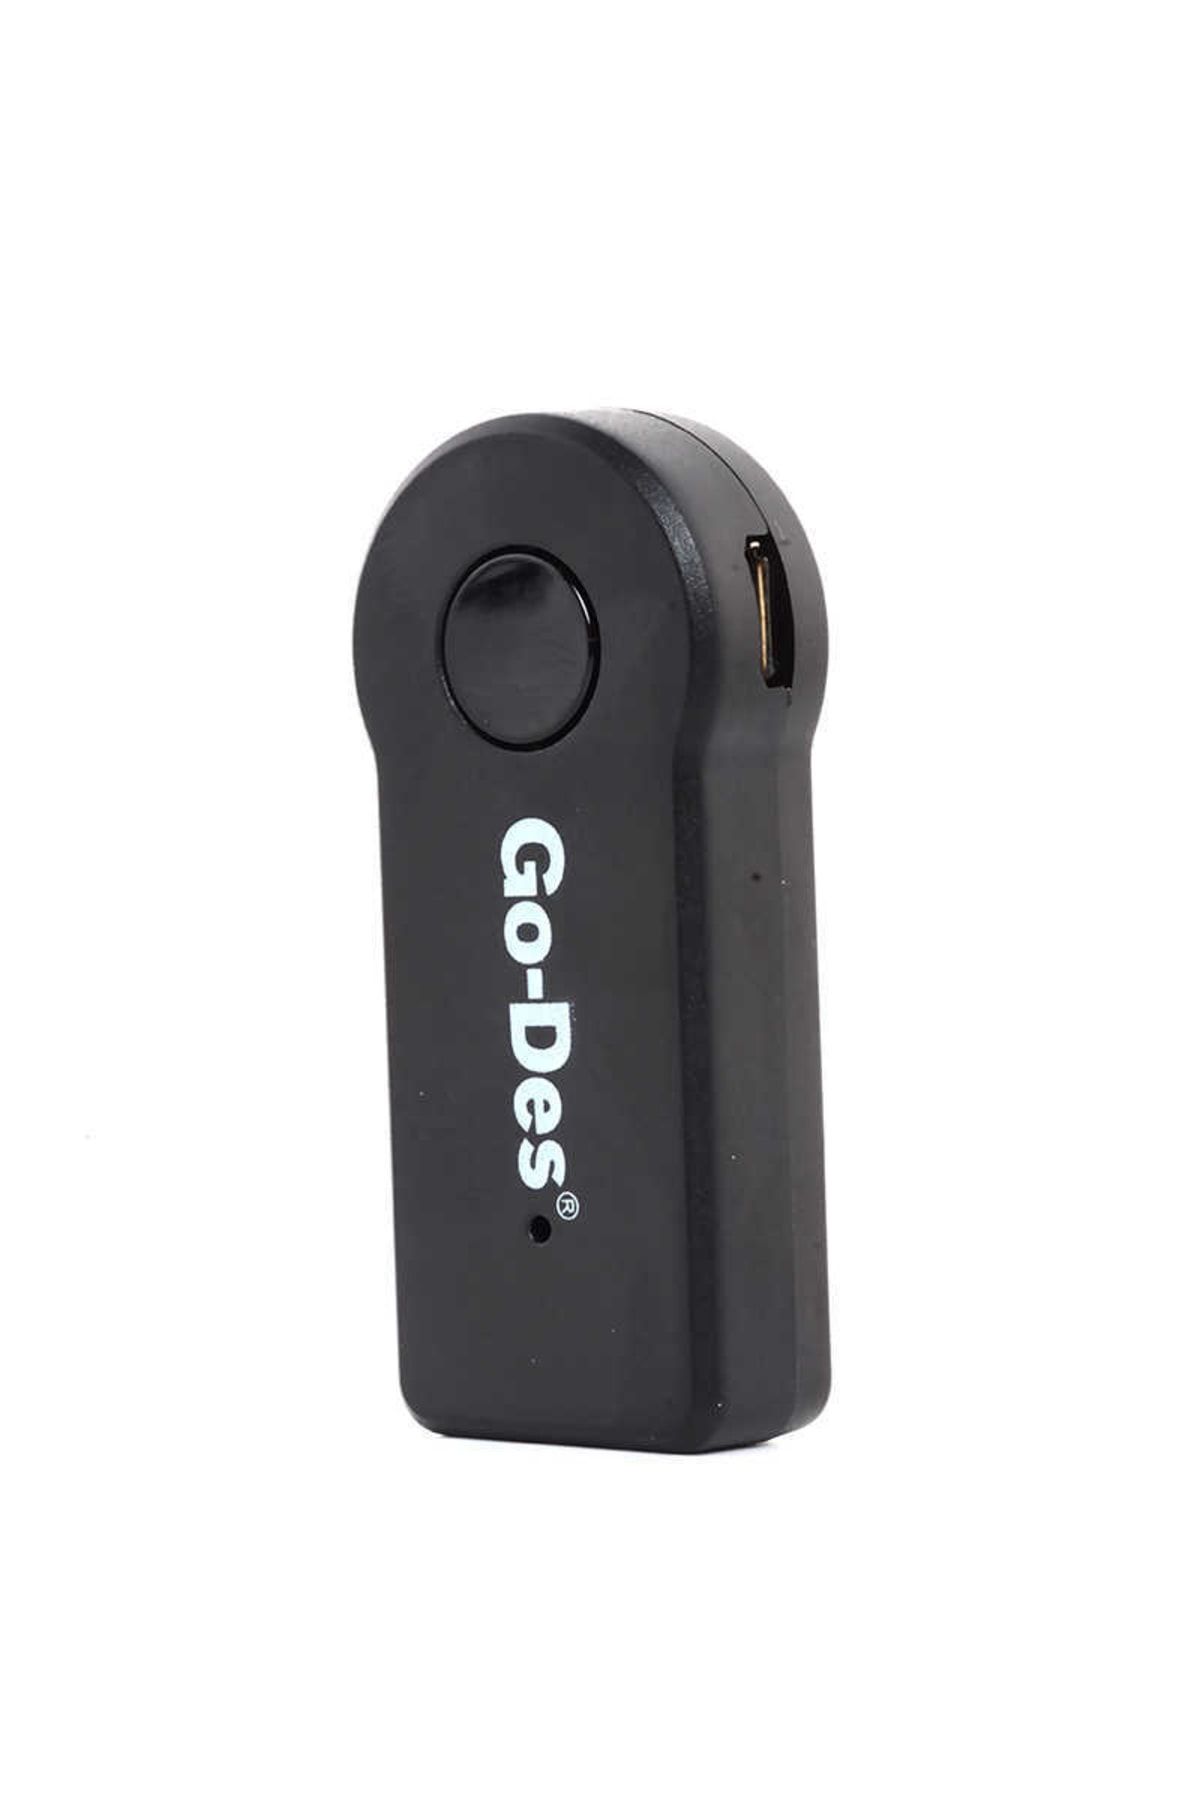 Go-Des Gd bt102 Bluetooth Reciever Mikrofonlu Tak  Çalıştır 3.5 mm Kablosuz Ses Alıcısı